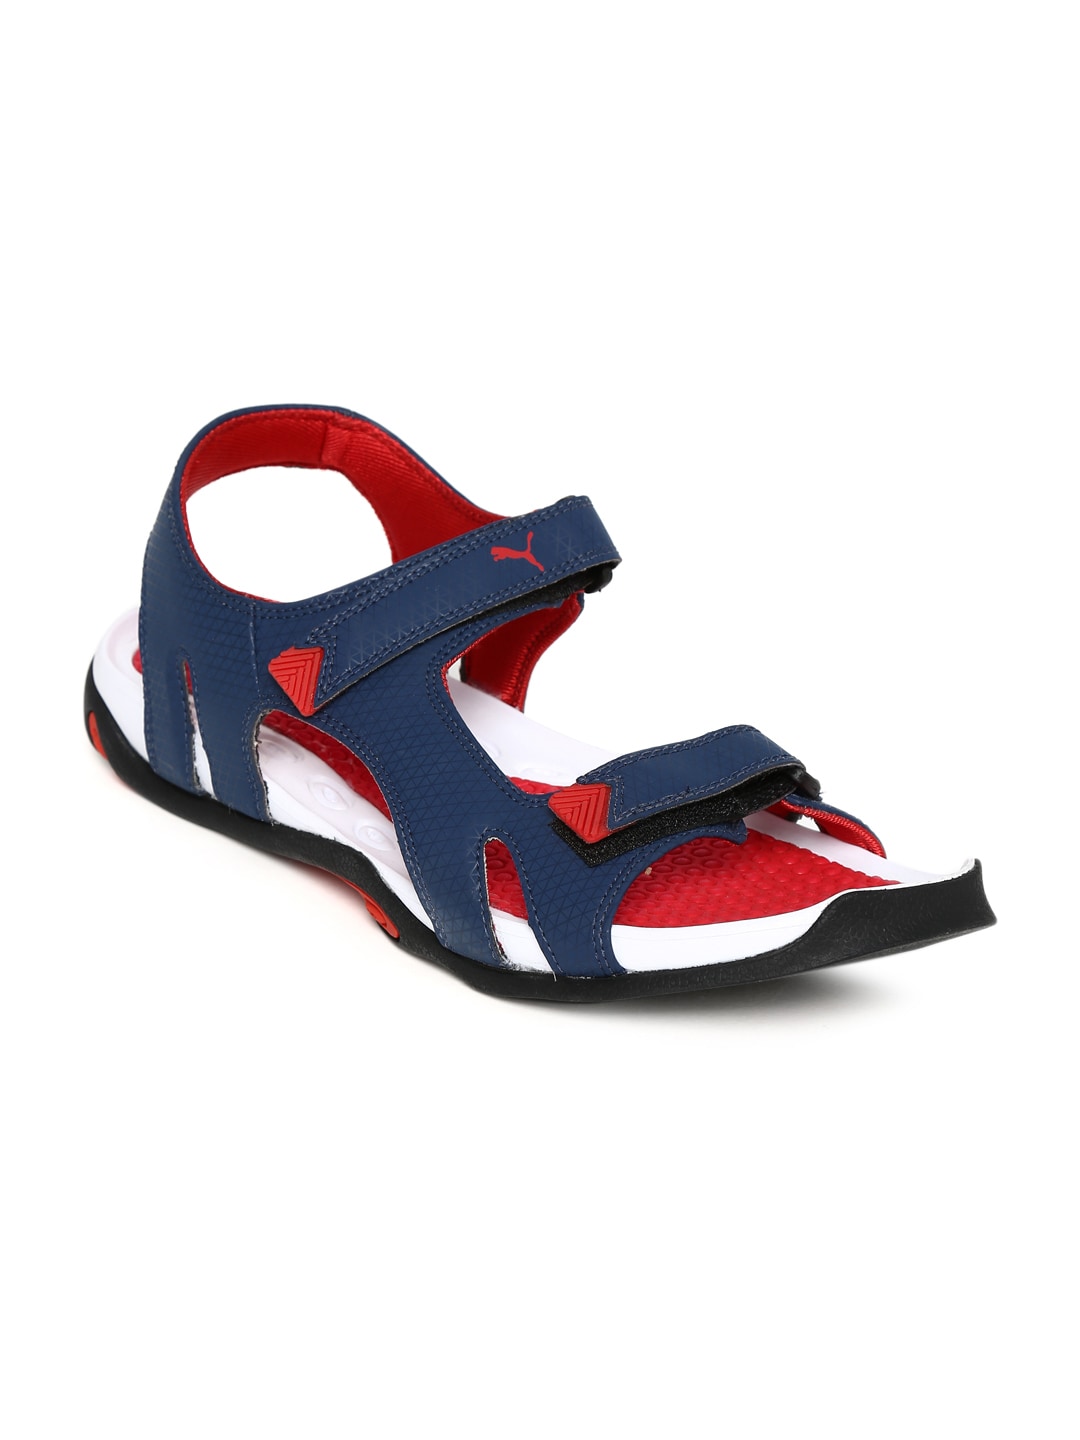 puma sports sandals for mens